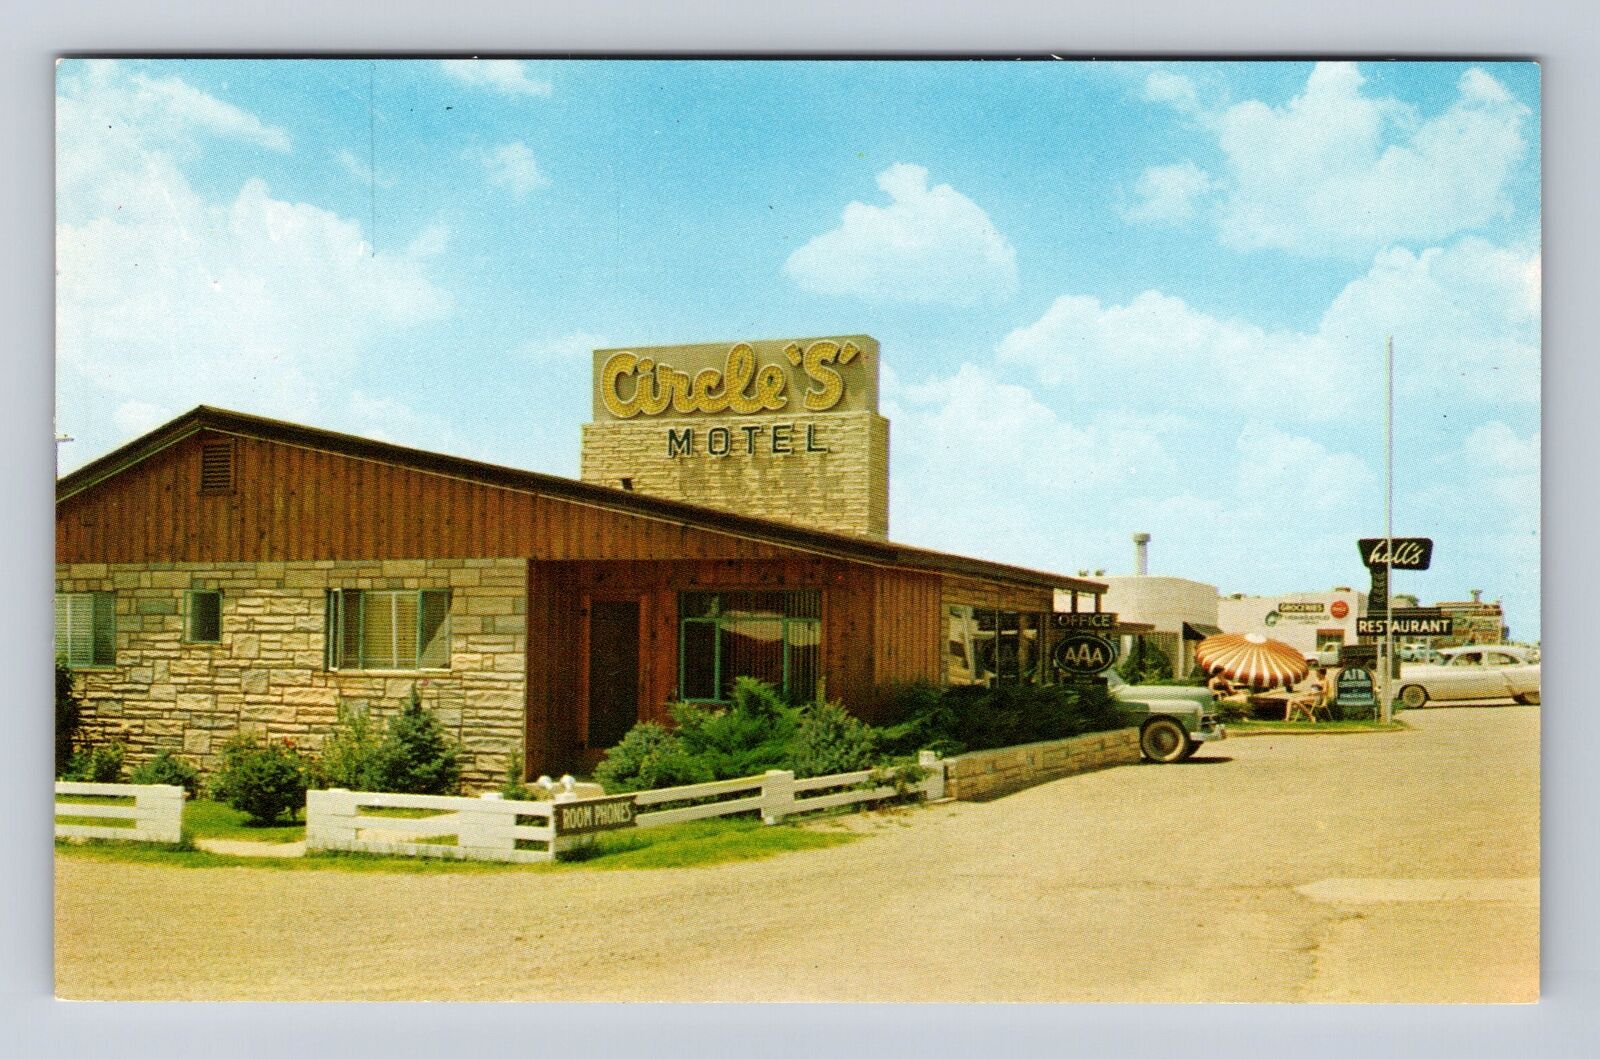 Tucumcari NM-New Mexico, Circle S Motel Advertising, Route 66 Vintage Postcard